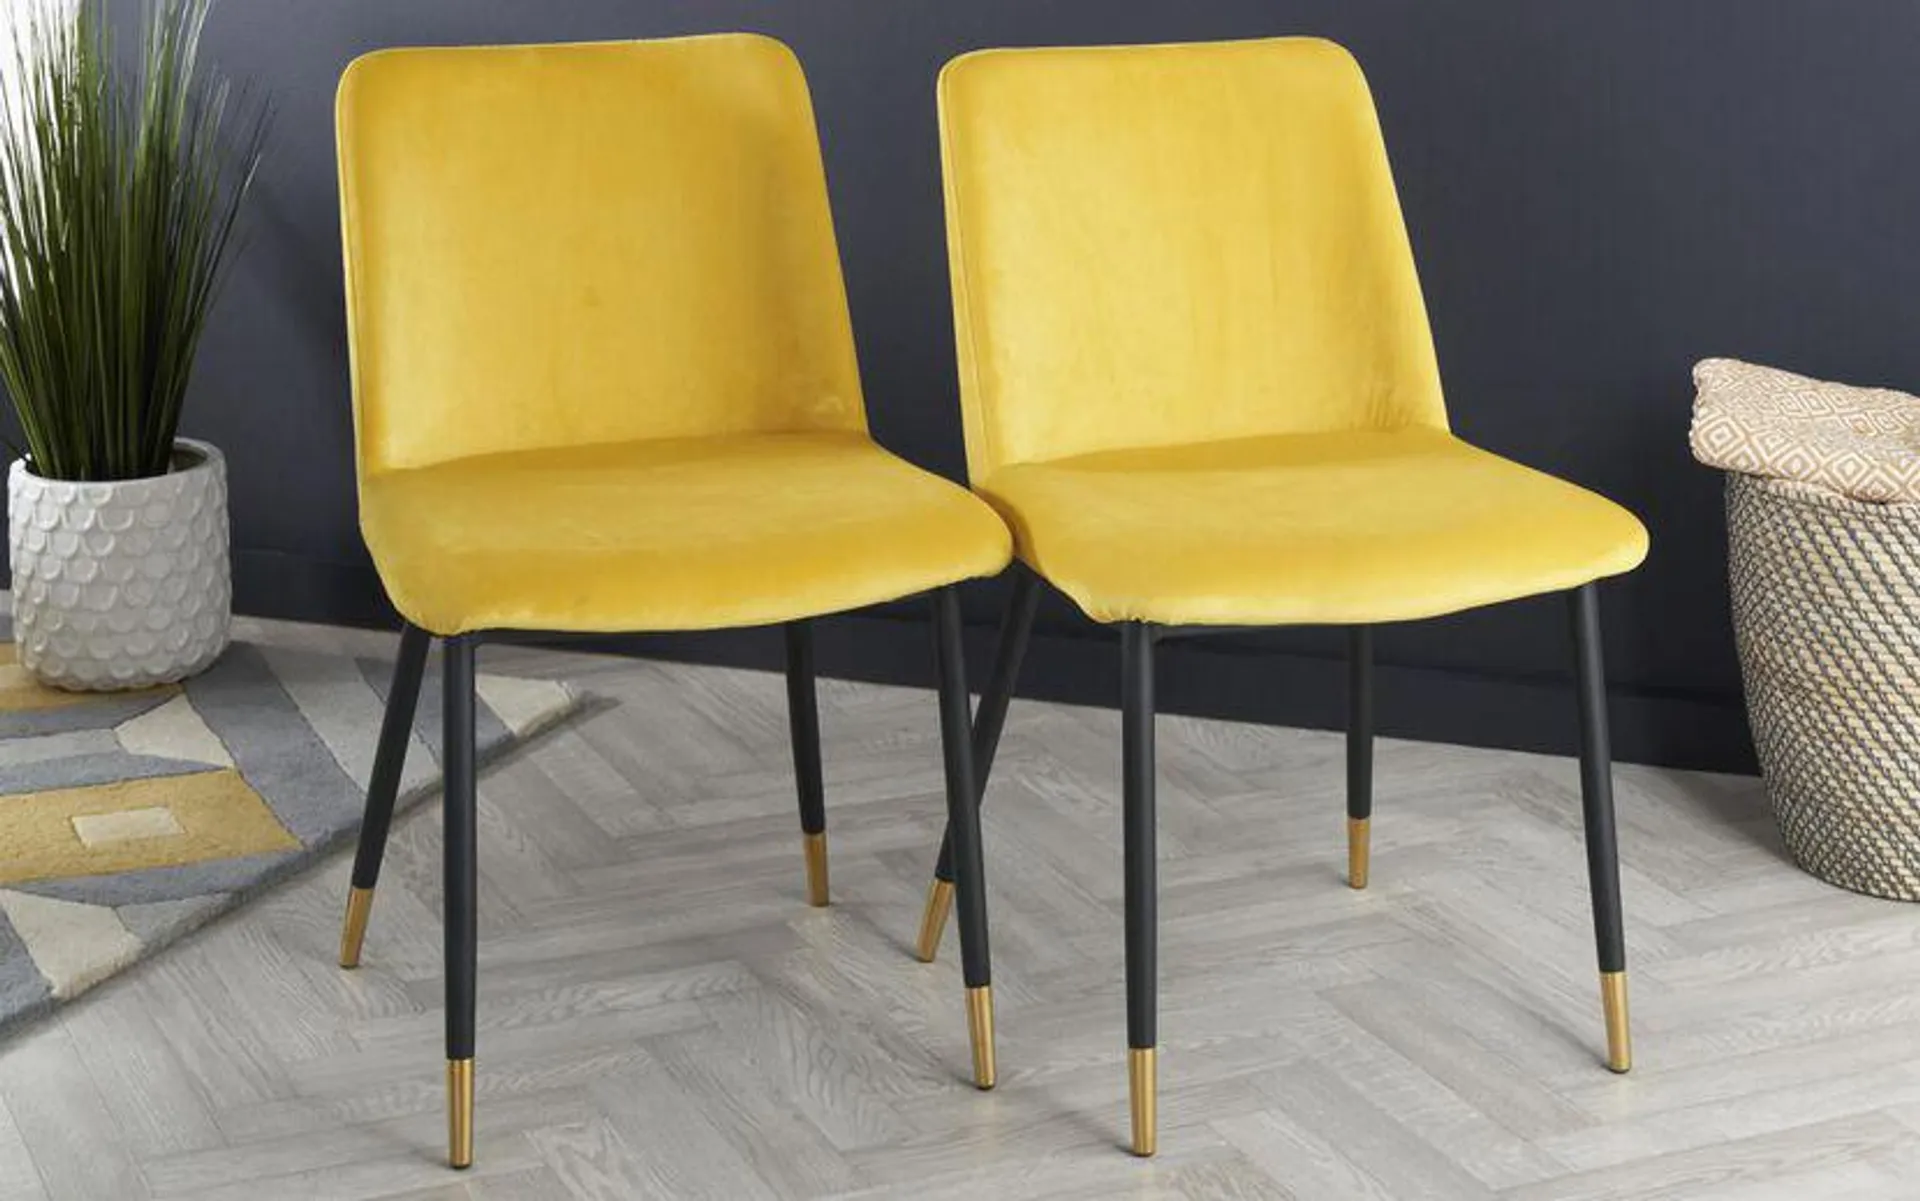 Montero Pair of Mustard Dining Chairs